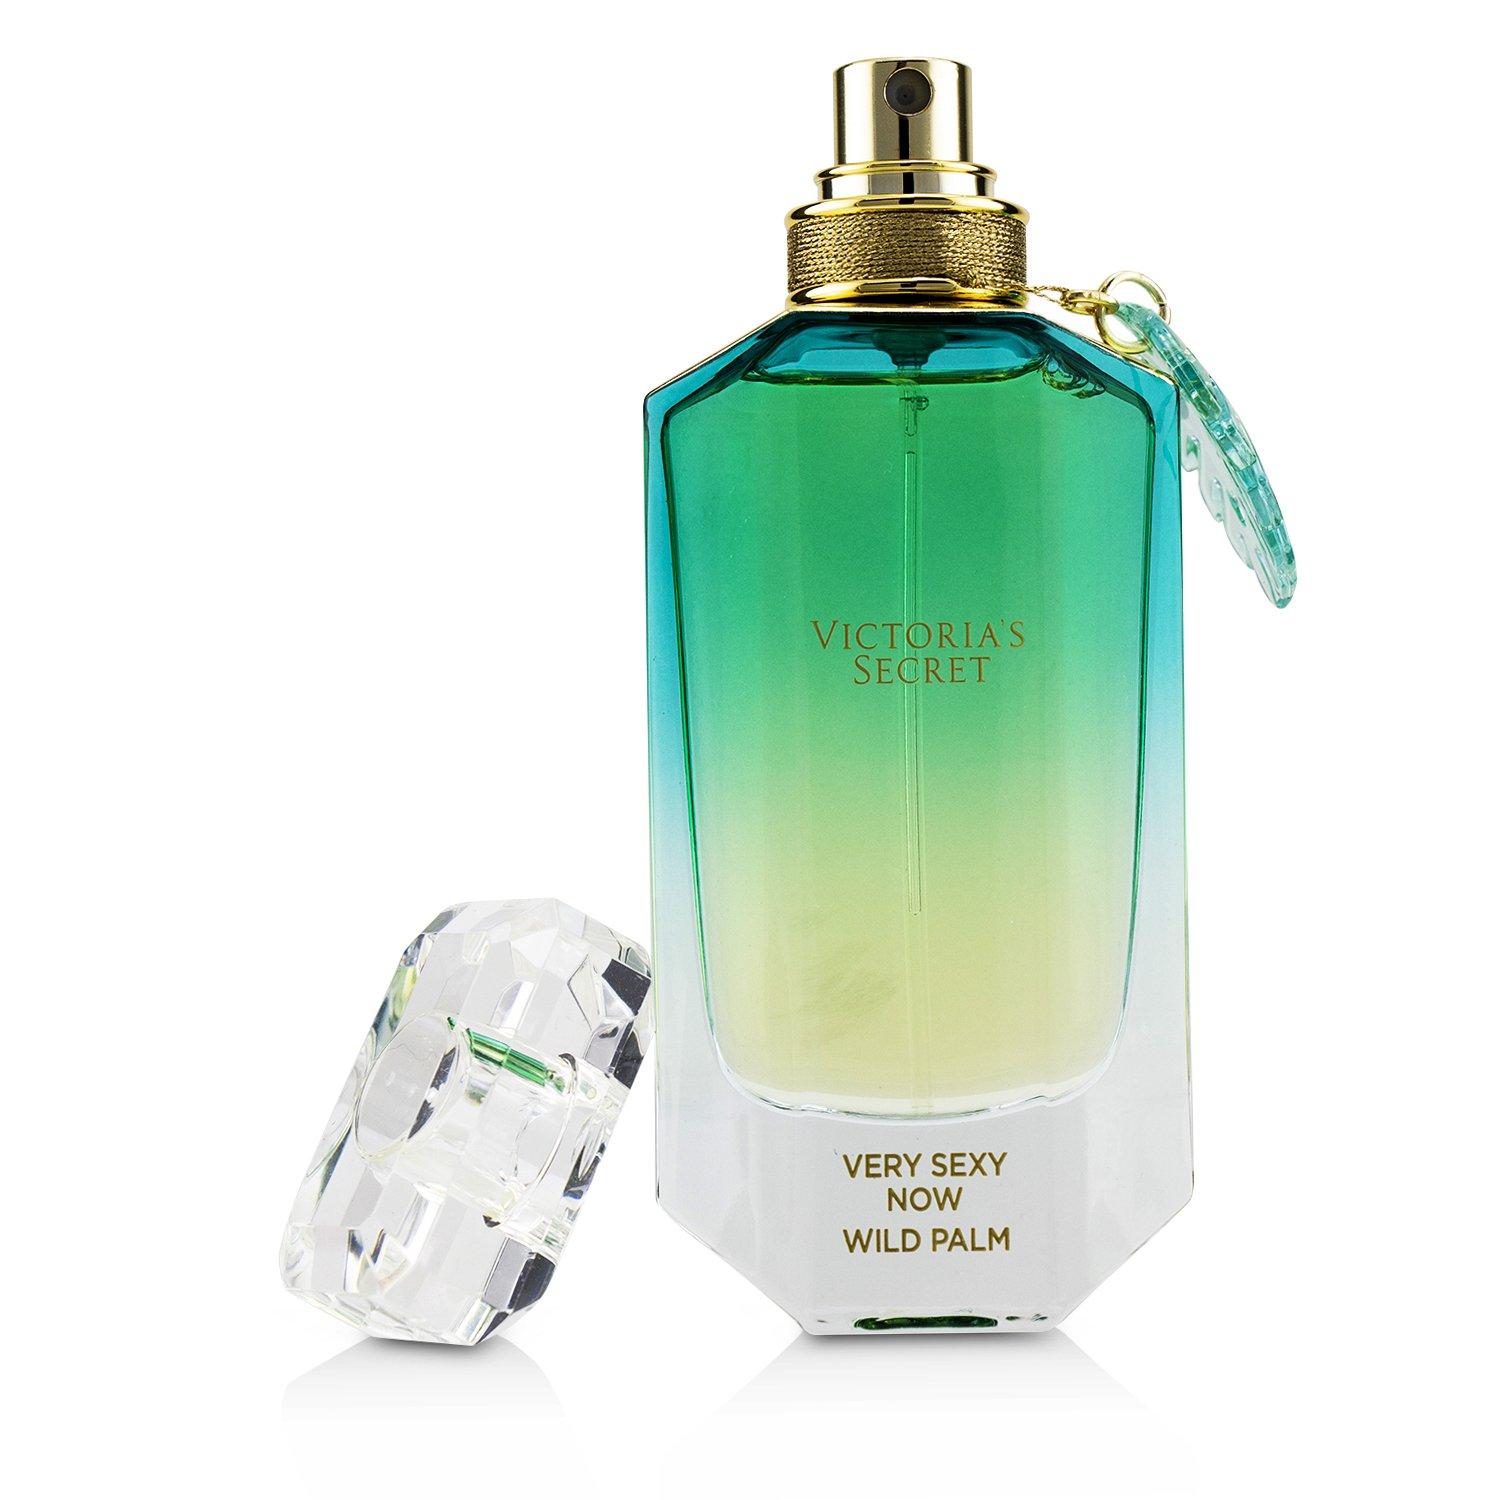 VICTORIA'S SECRET - Very Sexy Now Wild Palm Eau De Parfum Spray